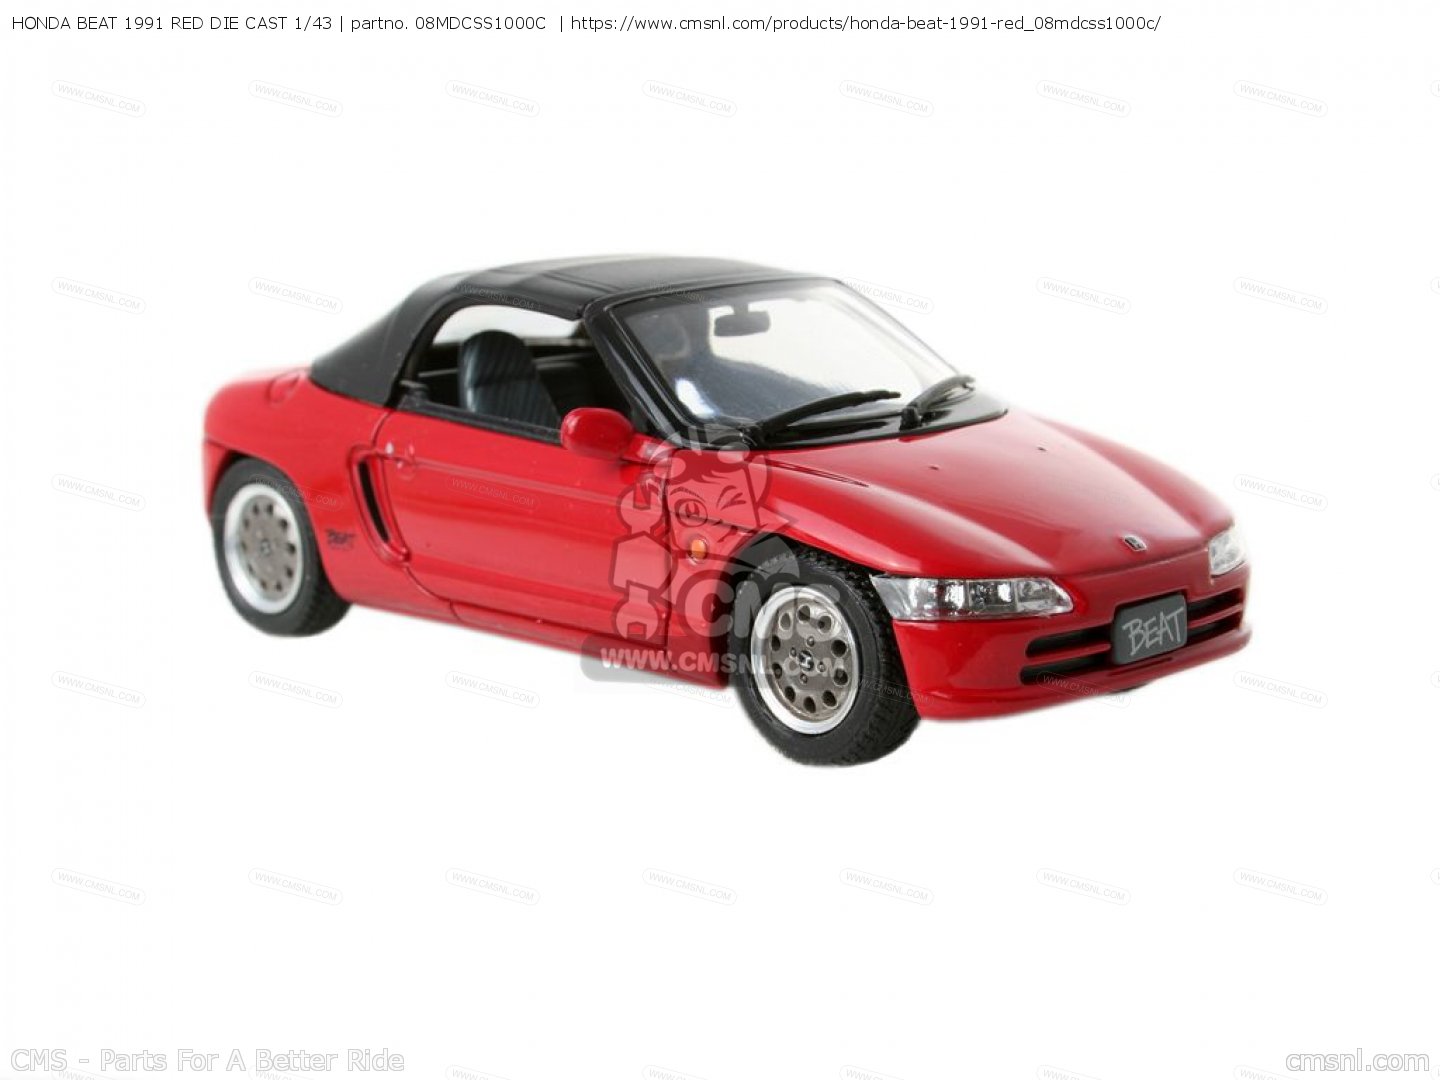 Honda Beat 1991 Red Die Cast 1/43 Scale Models 08MDCSS1000C